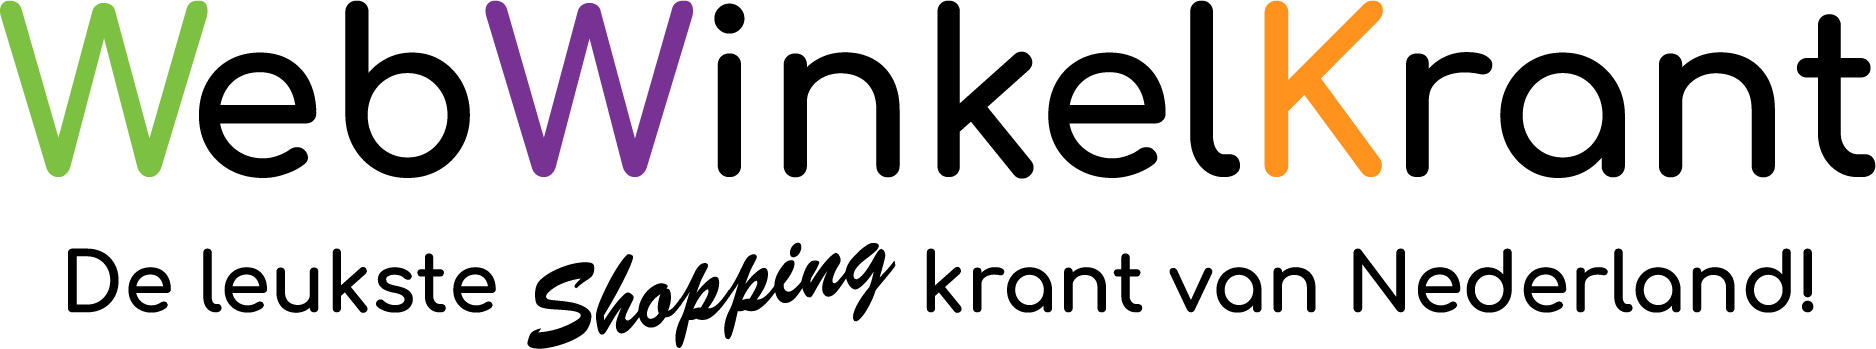 WebWinkelKrant Logo